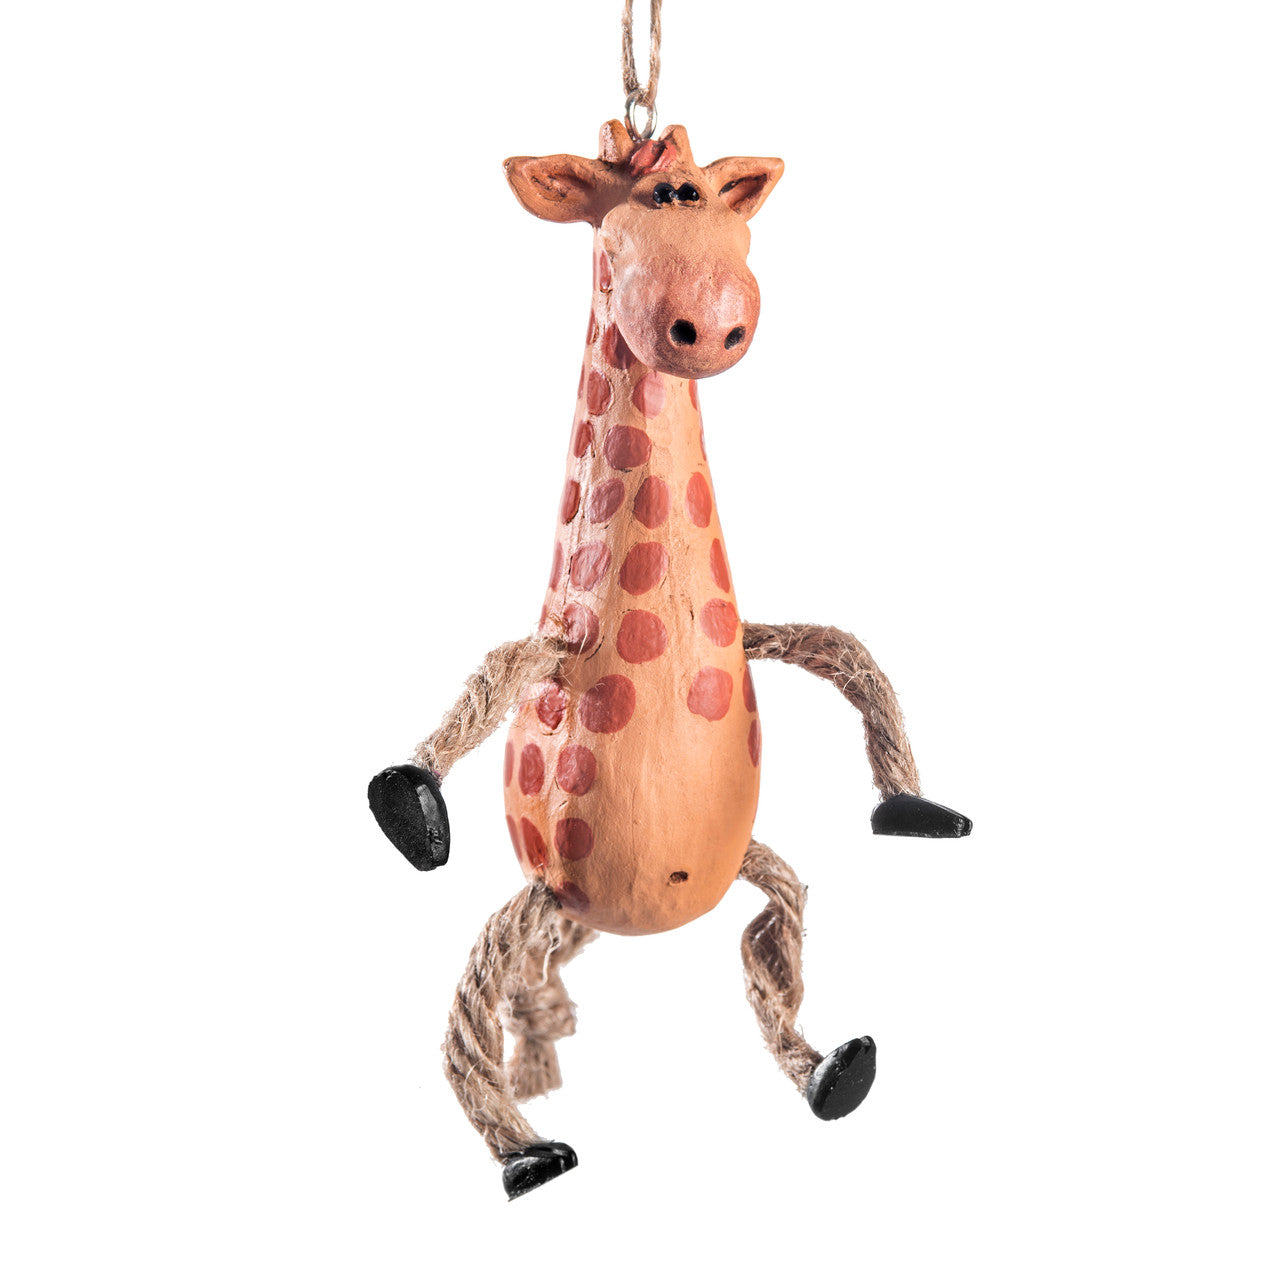 Bac 007 Giraffe Ornament Set of 3